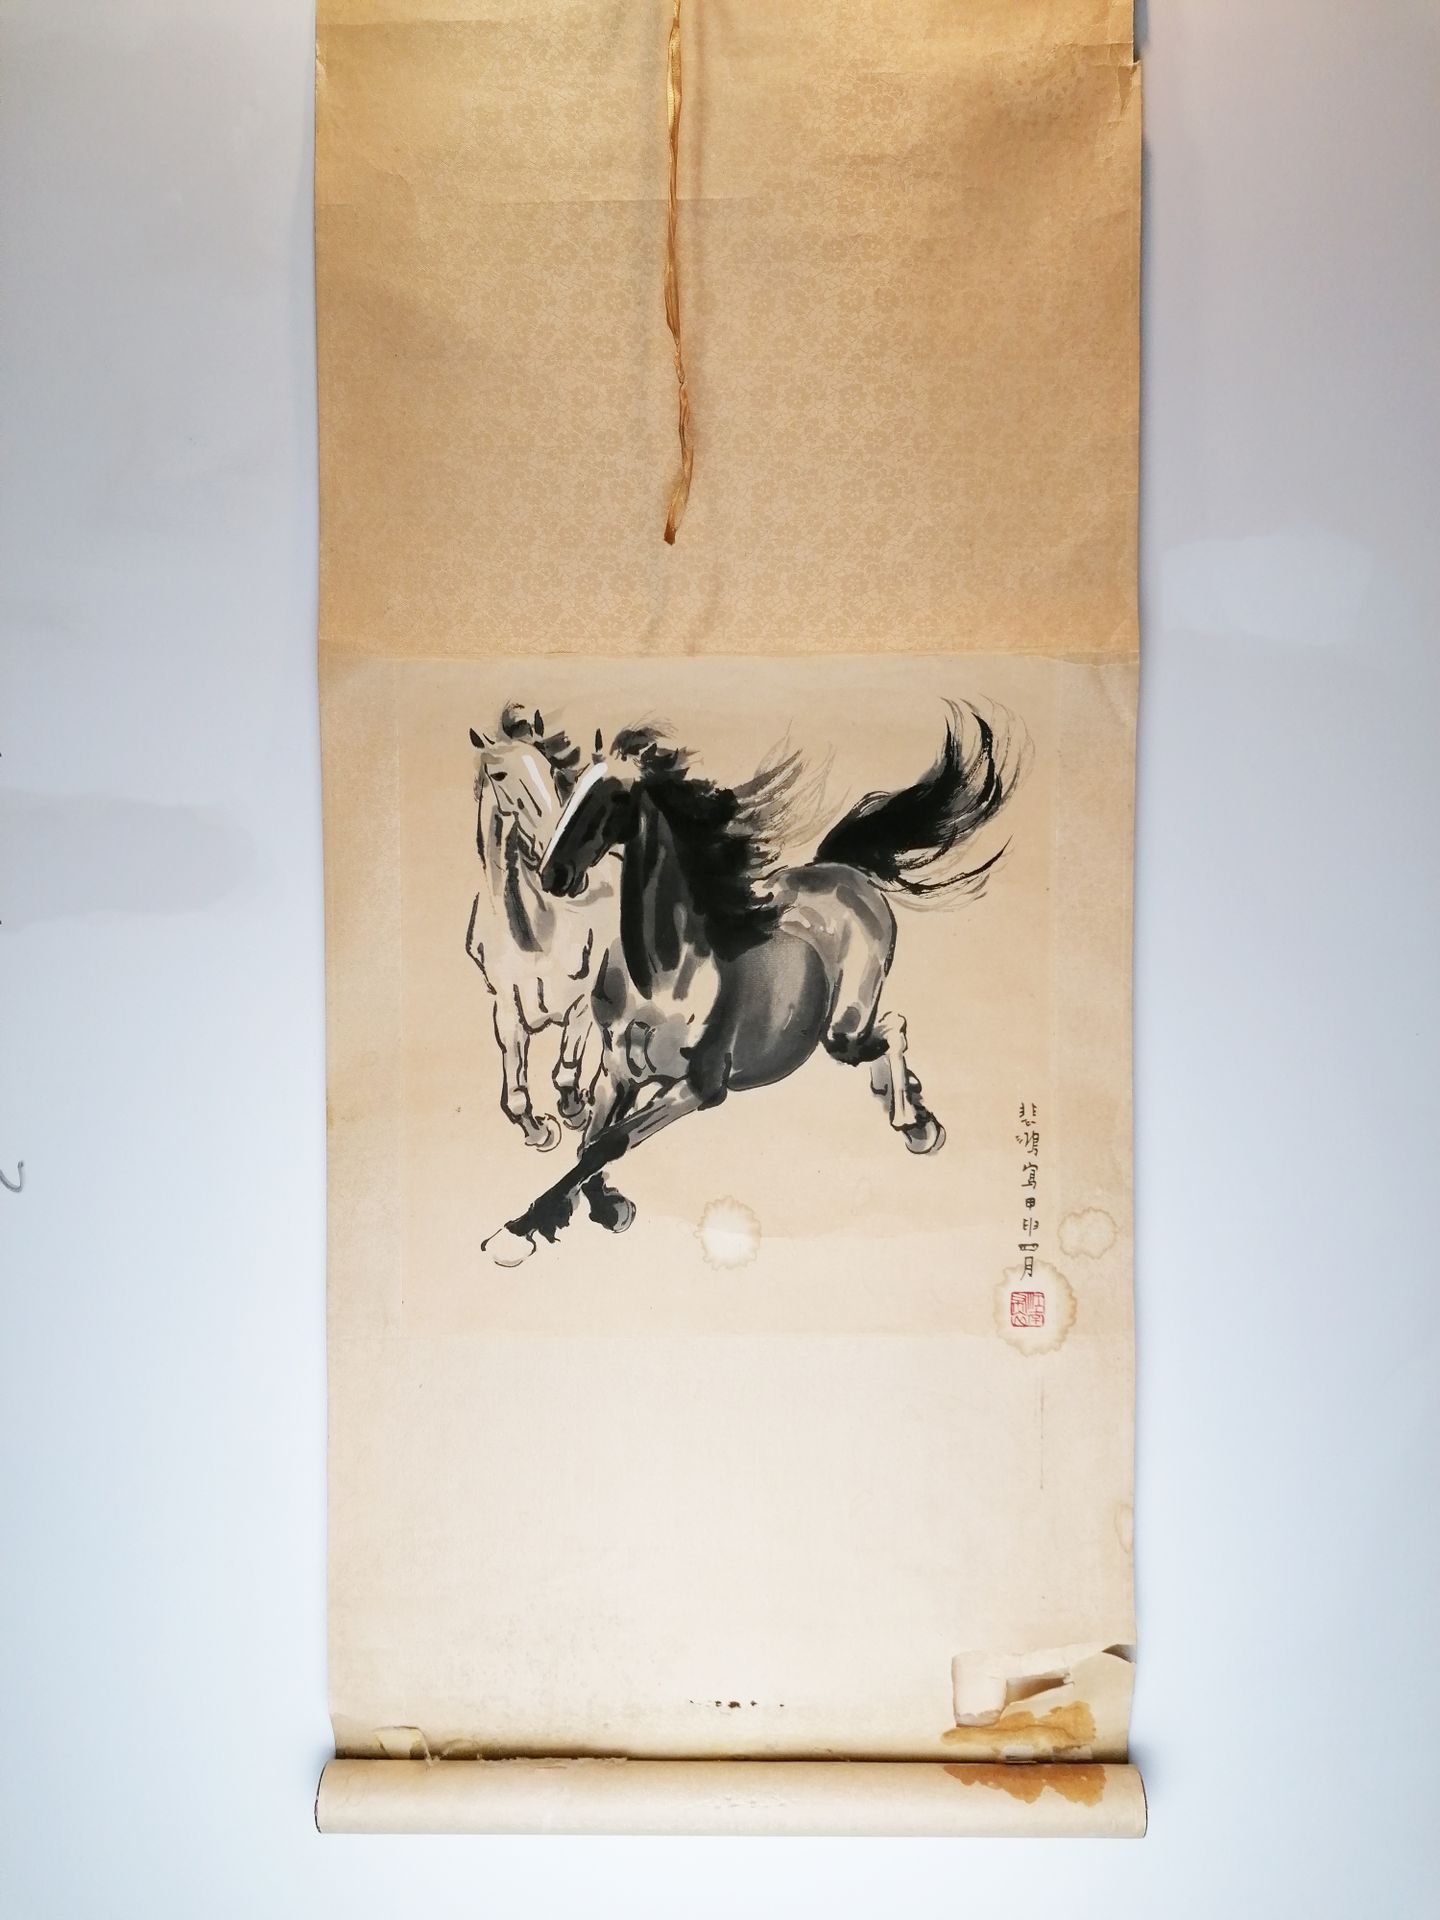 Null CHINA, siglo XX
La carrera
Tinta china representando caballos
Papel pegado &hellip;